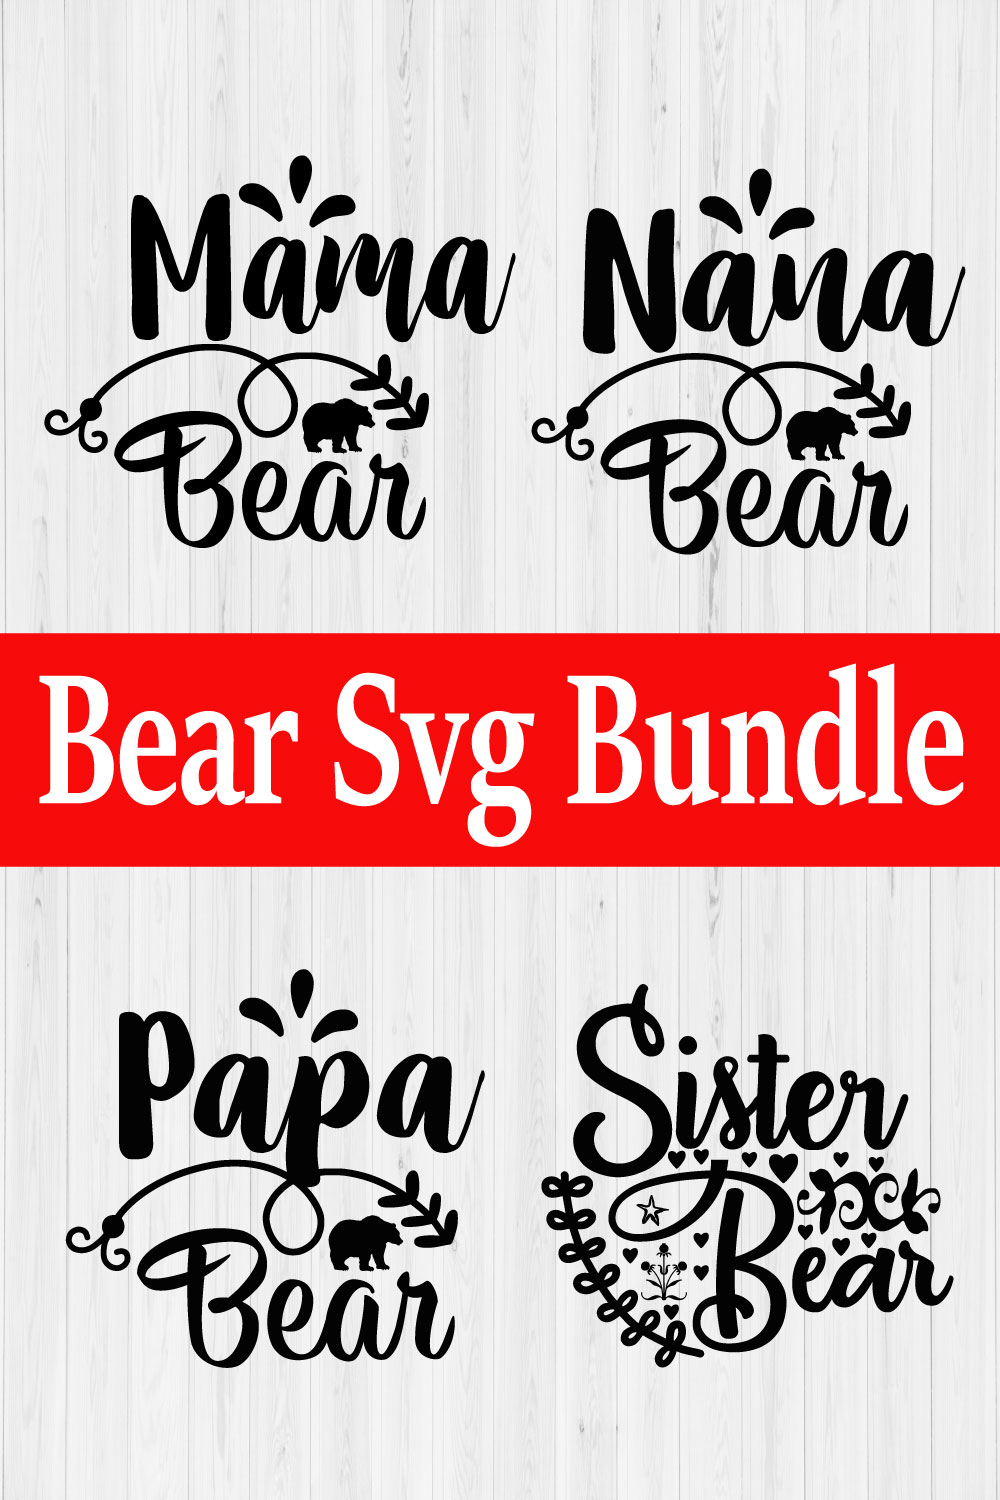 Bear Svg Design Bundle Vol2 pinterest preview image.